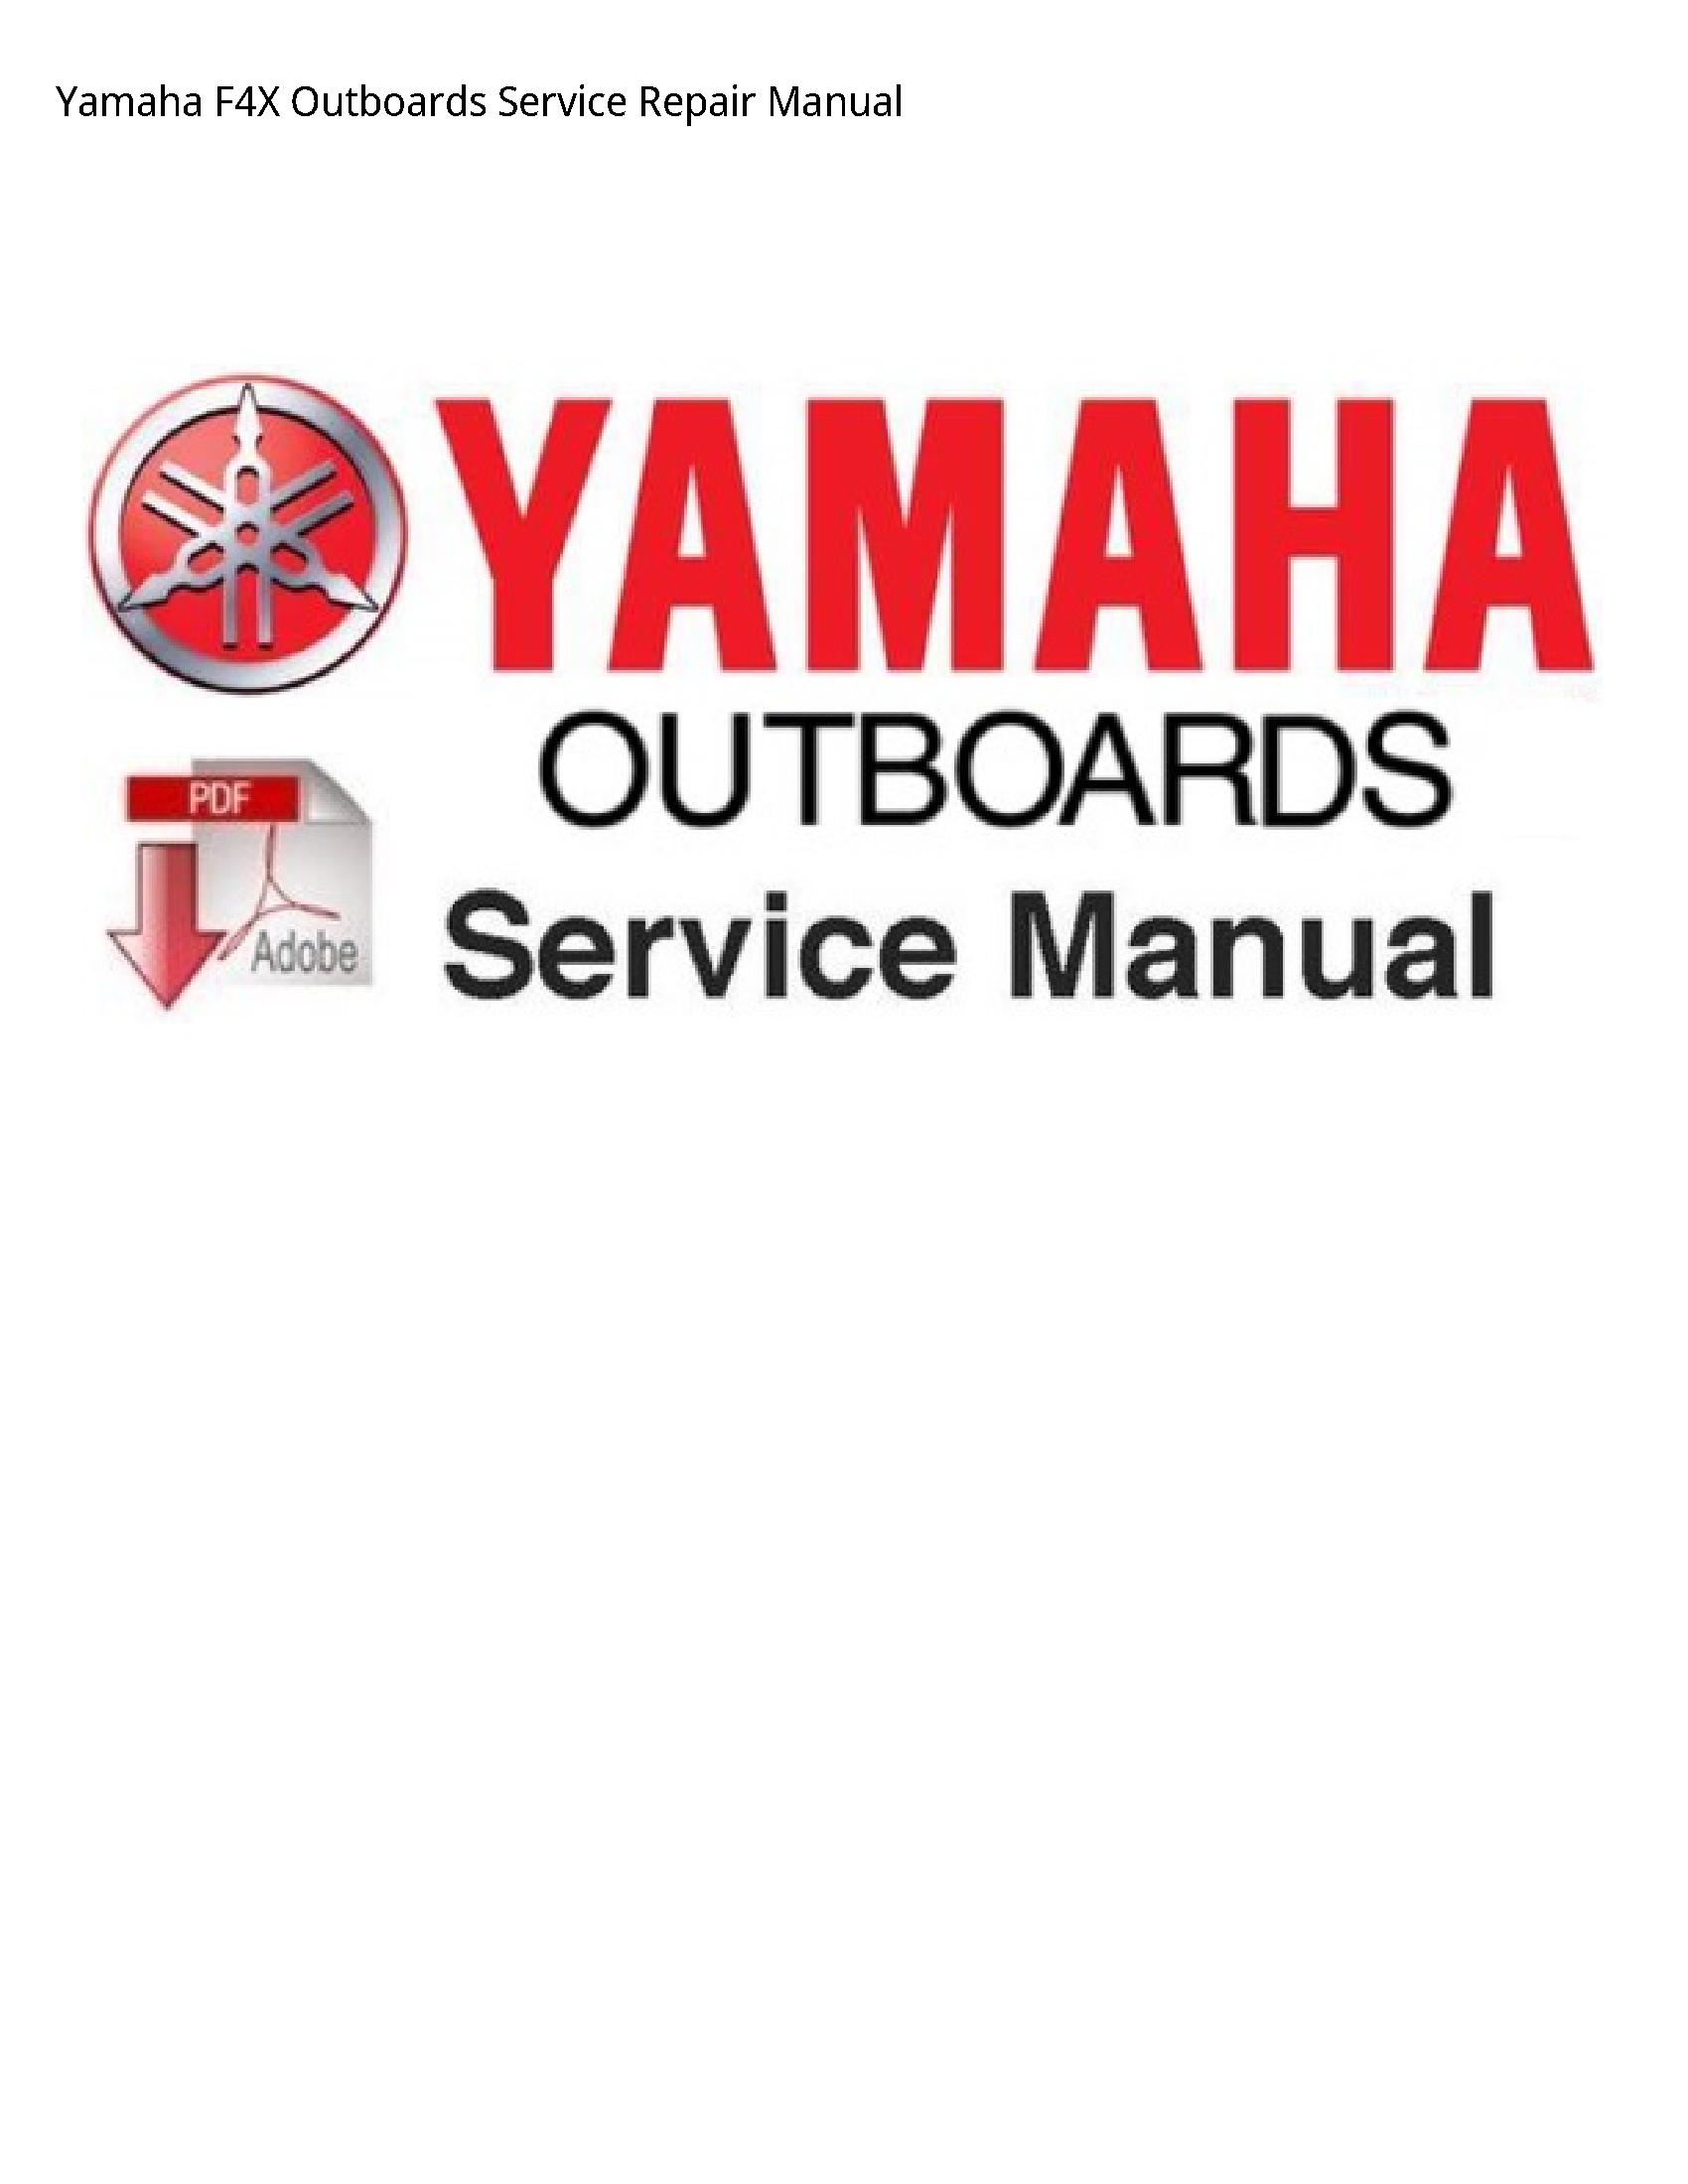 Yamaha F4X Outboards manual